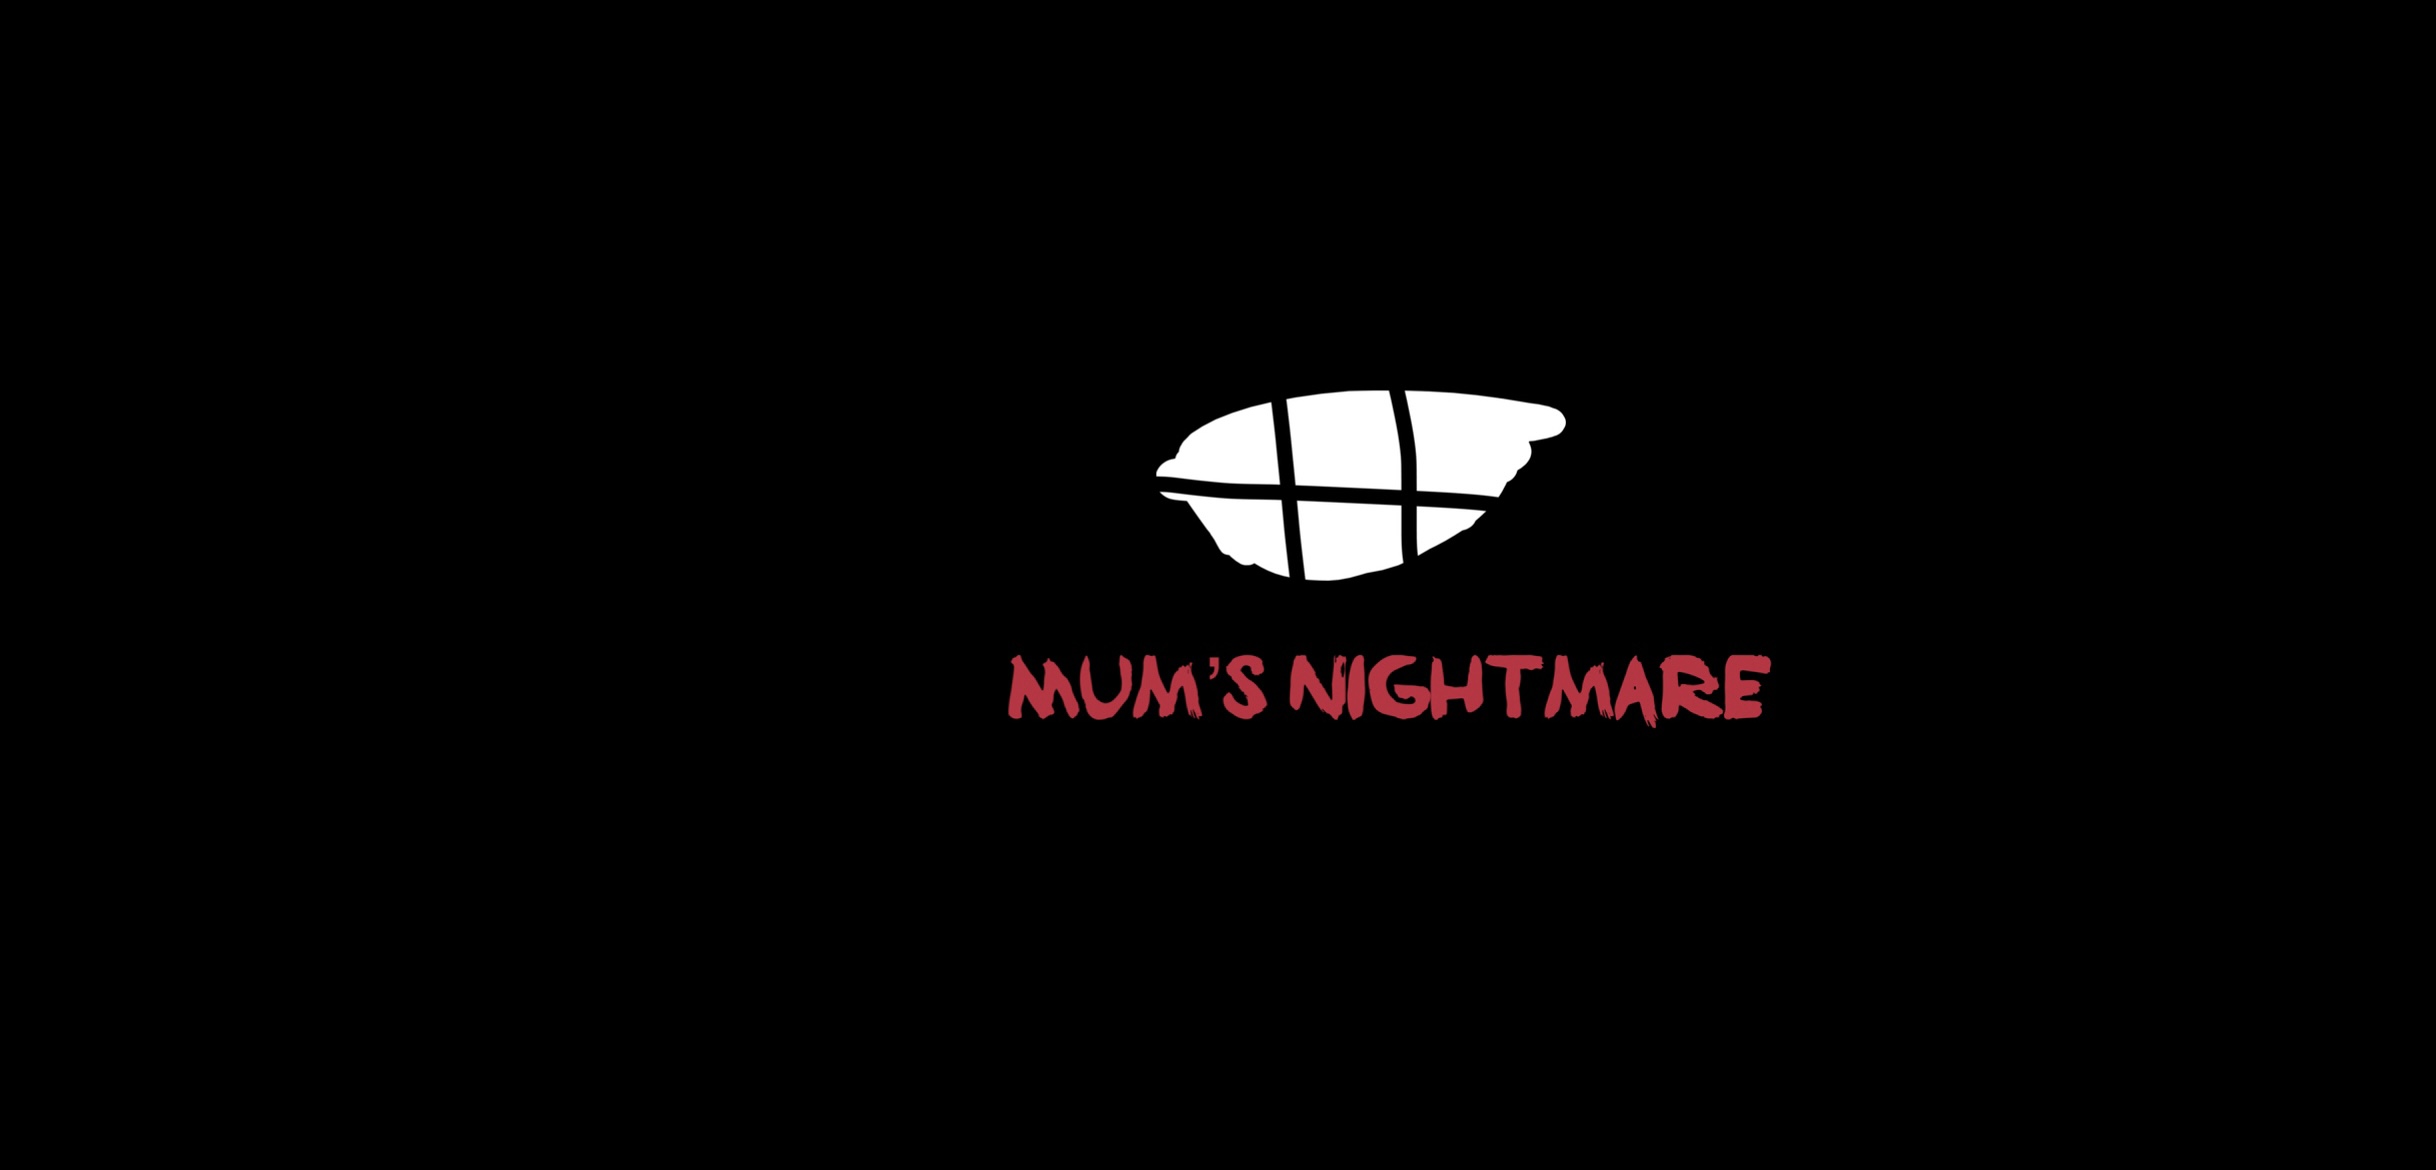 Mum’s nightmare (mobile friendly)